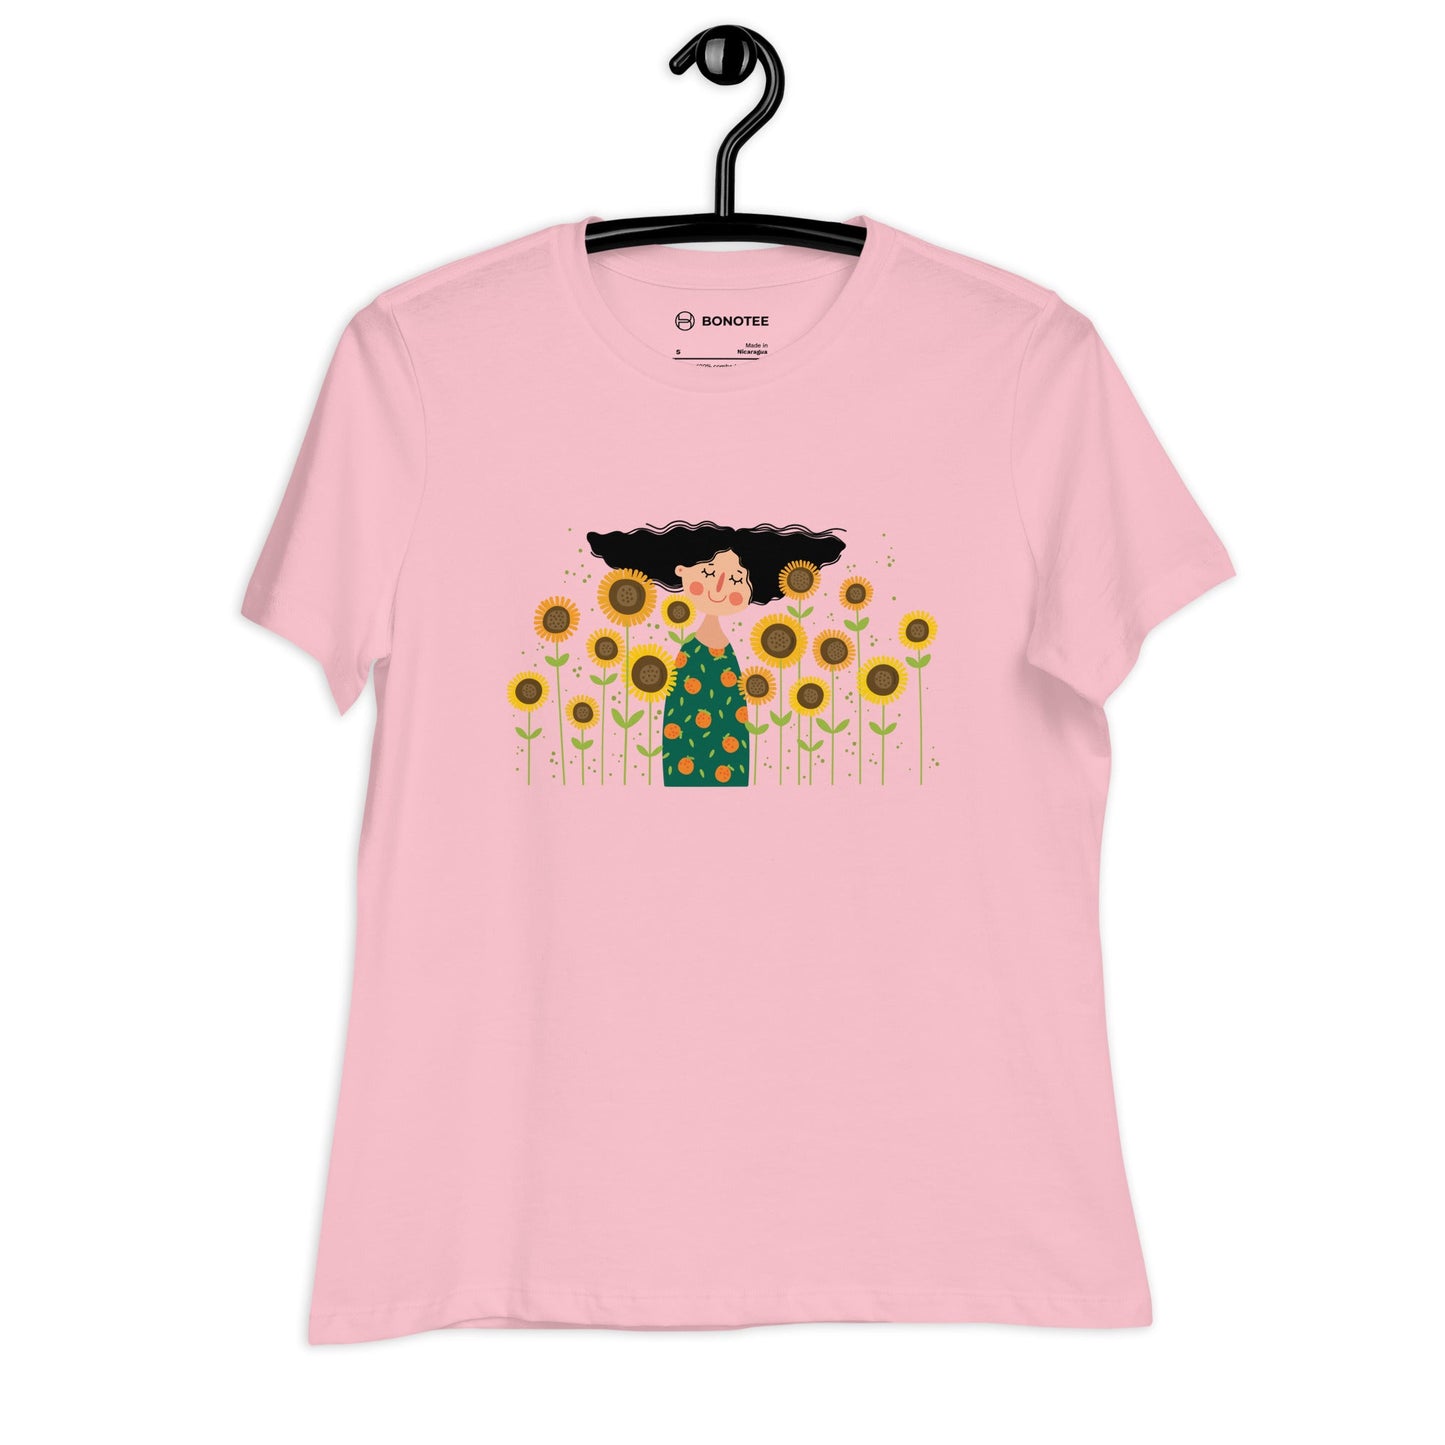 WHOLE LOTTA LOVE Women's T-Shirt - Bonotee